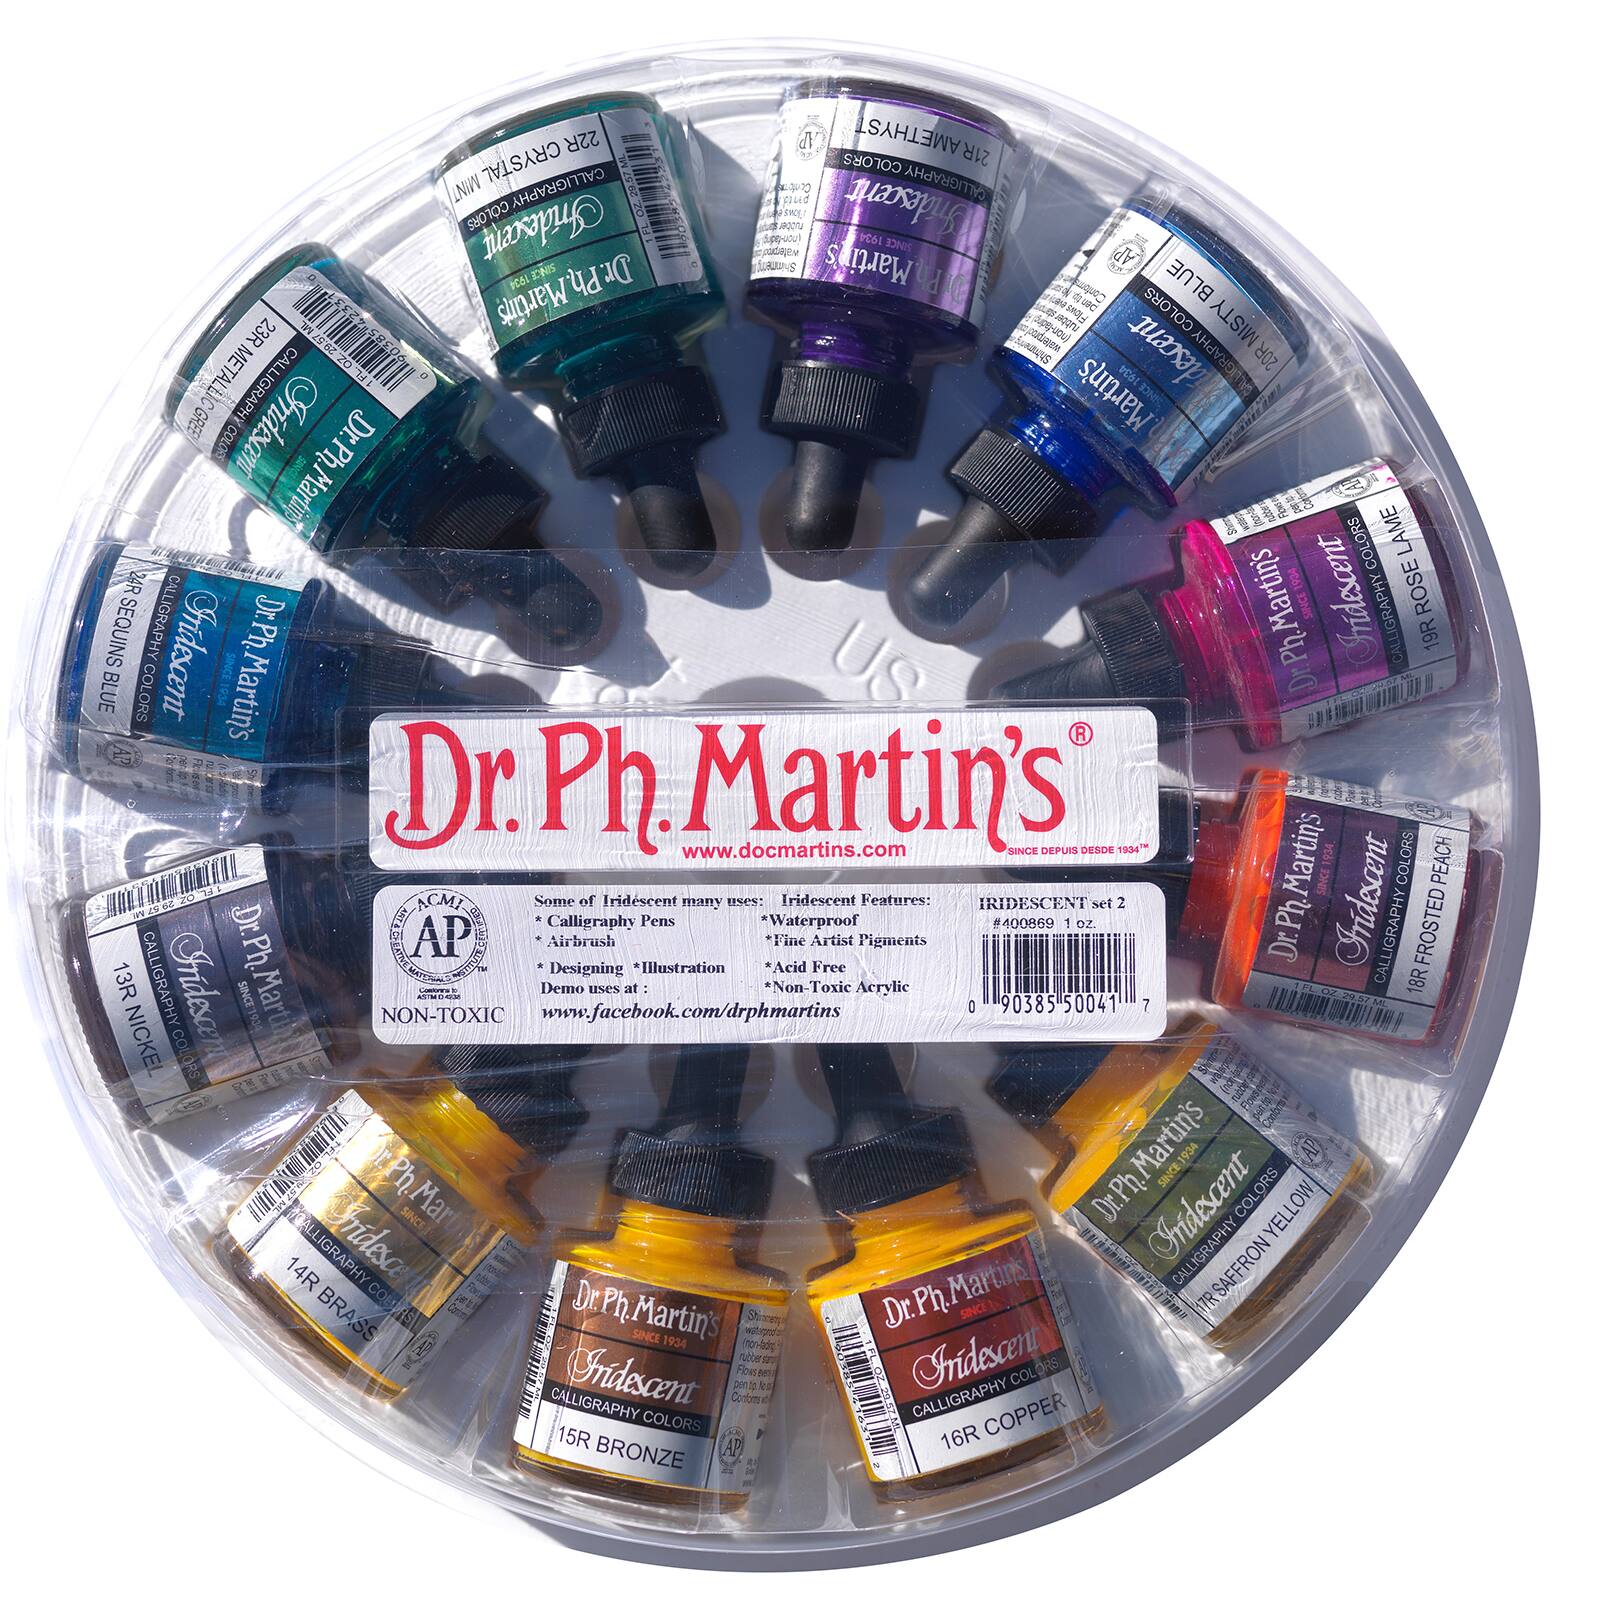 Dr. Ph. Martin's Iridescent Calligraphy Ink Set - Set 1, 1 oz bottles